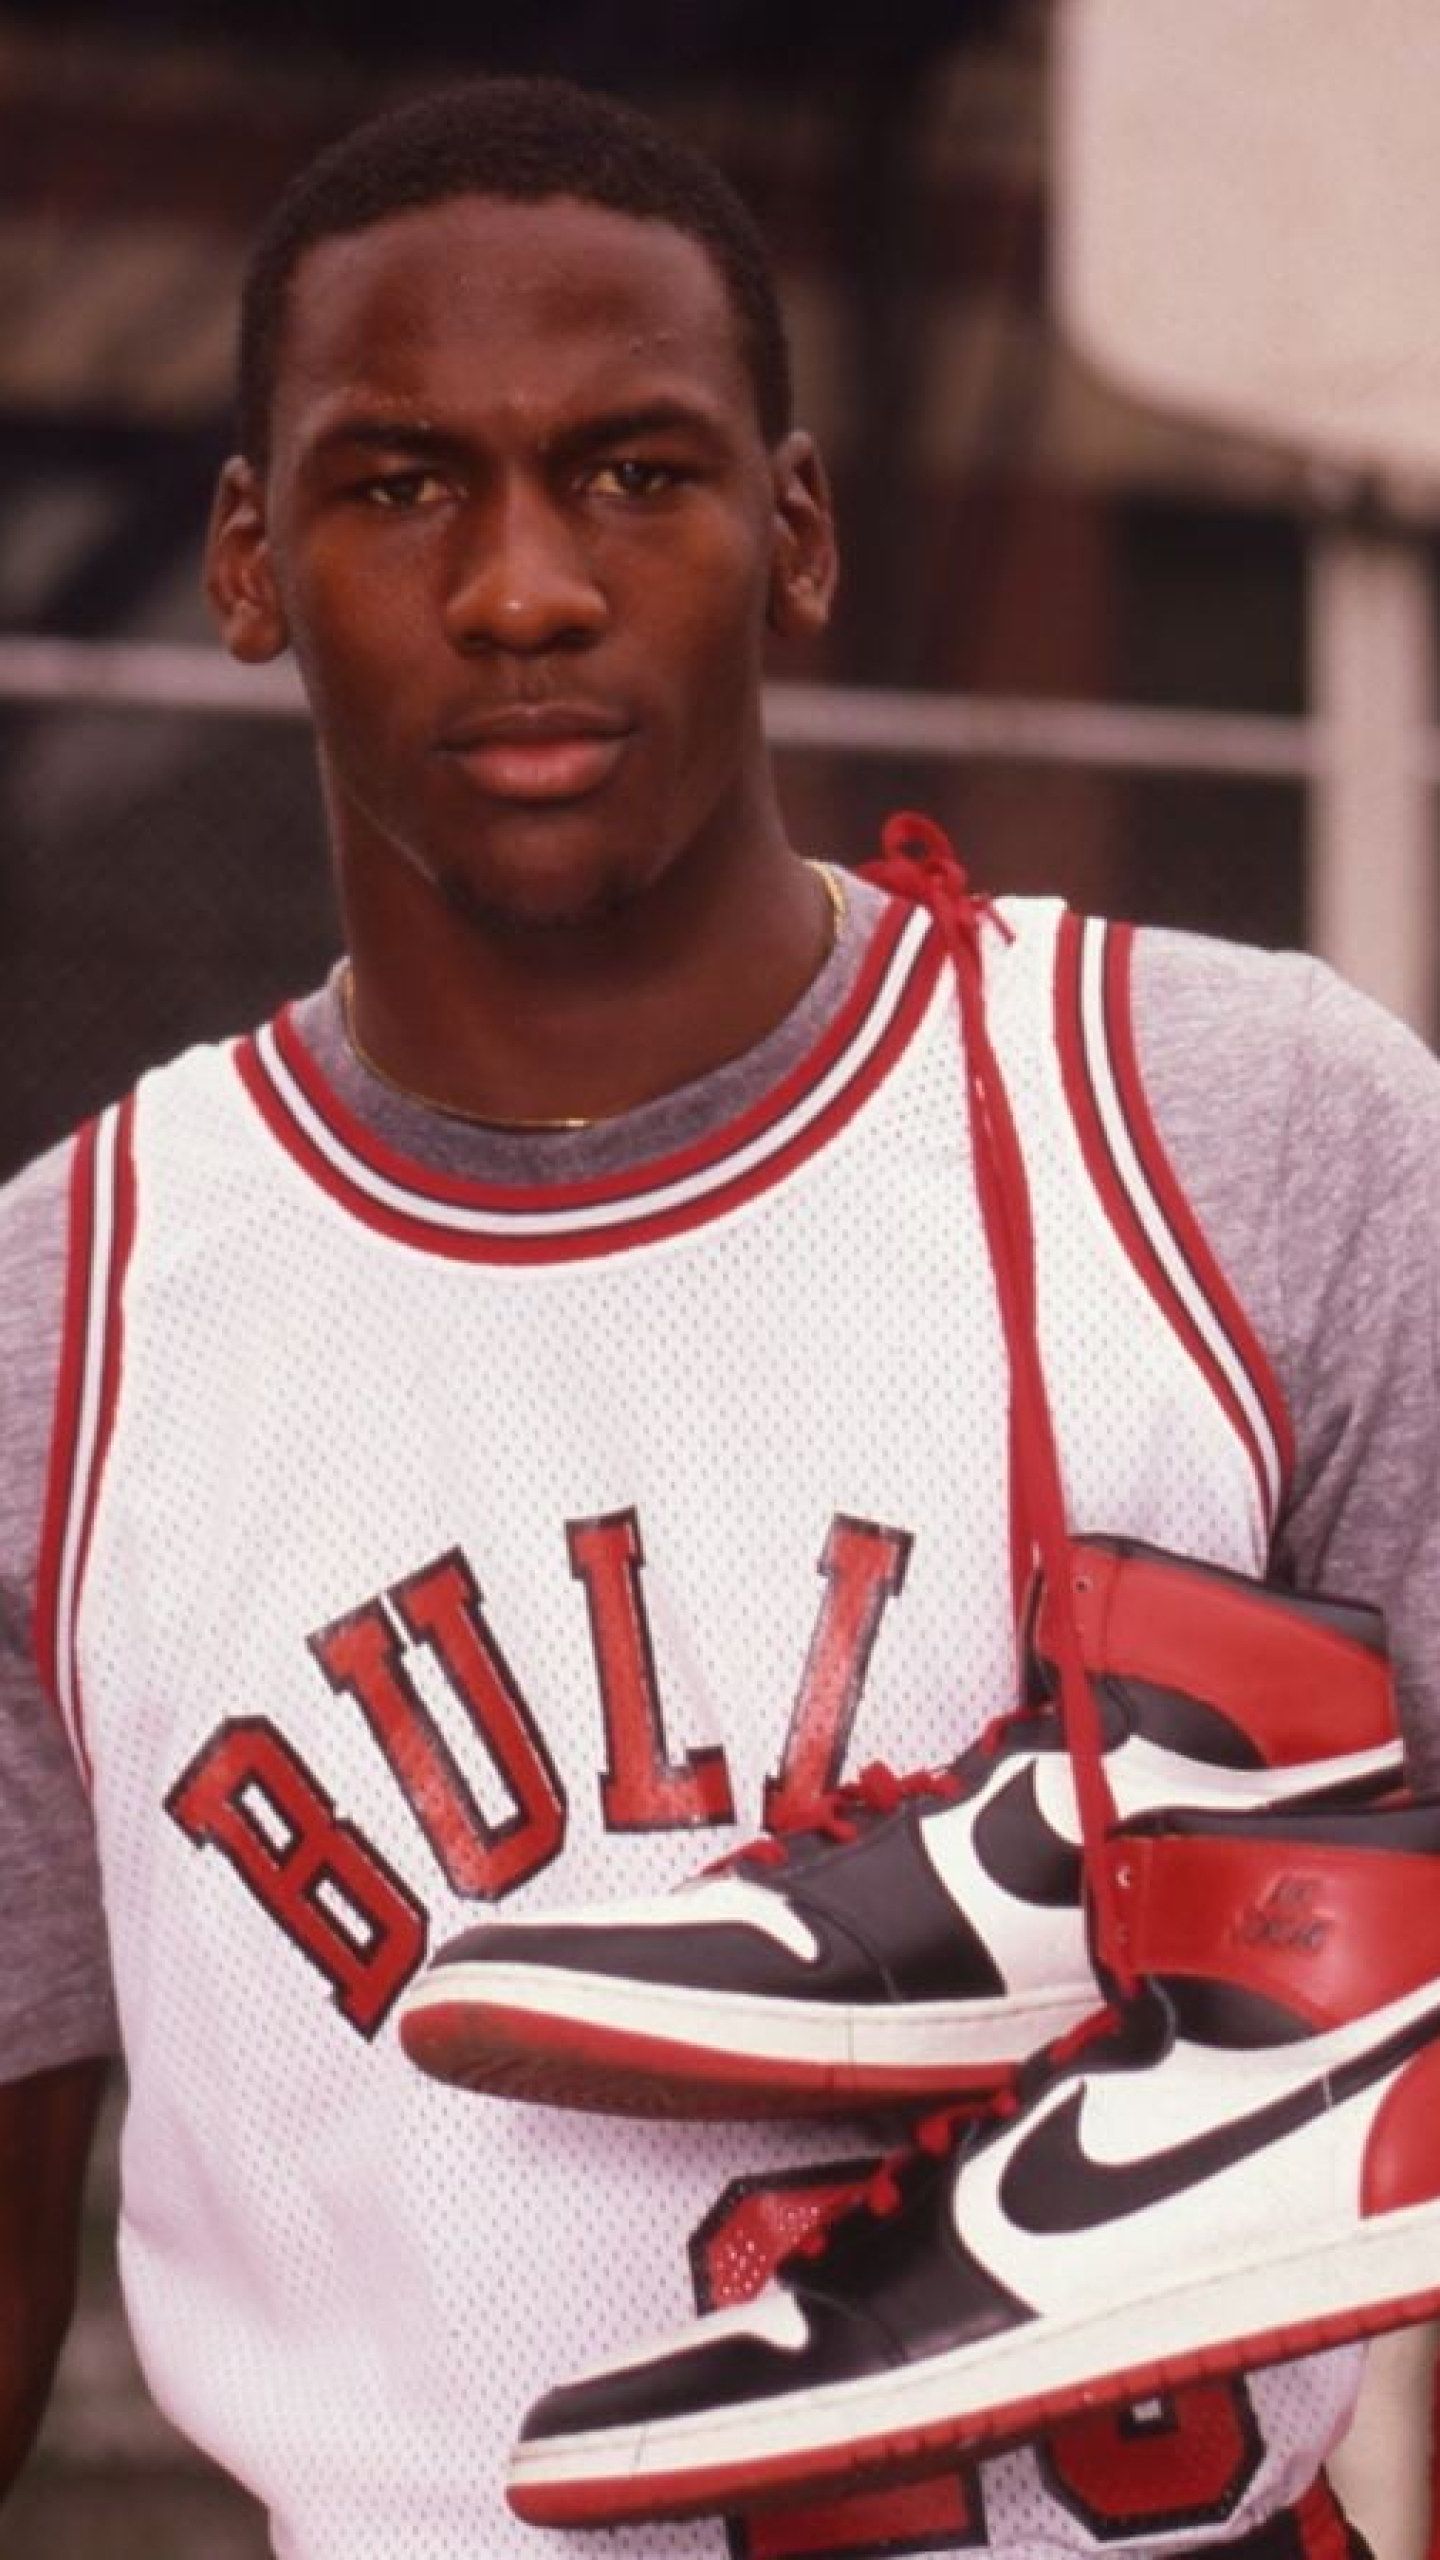 Michael Jordan holding a pair of his signature sneakers. - Air Jordan, Michael Jordan